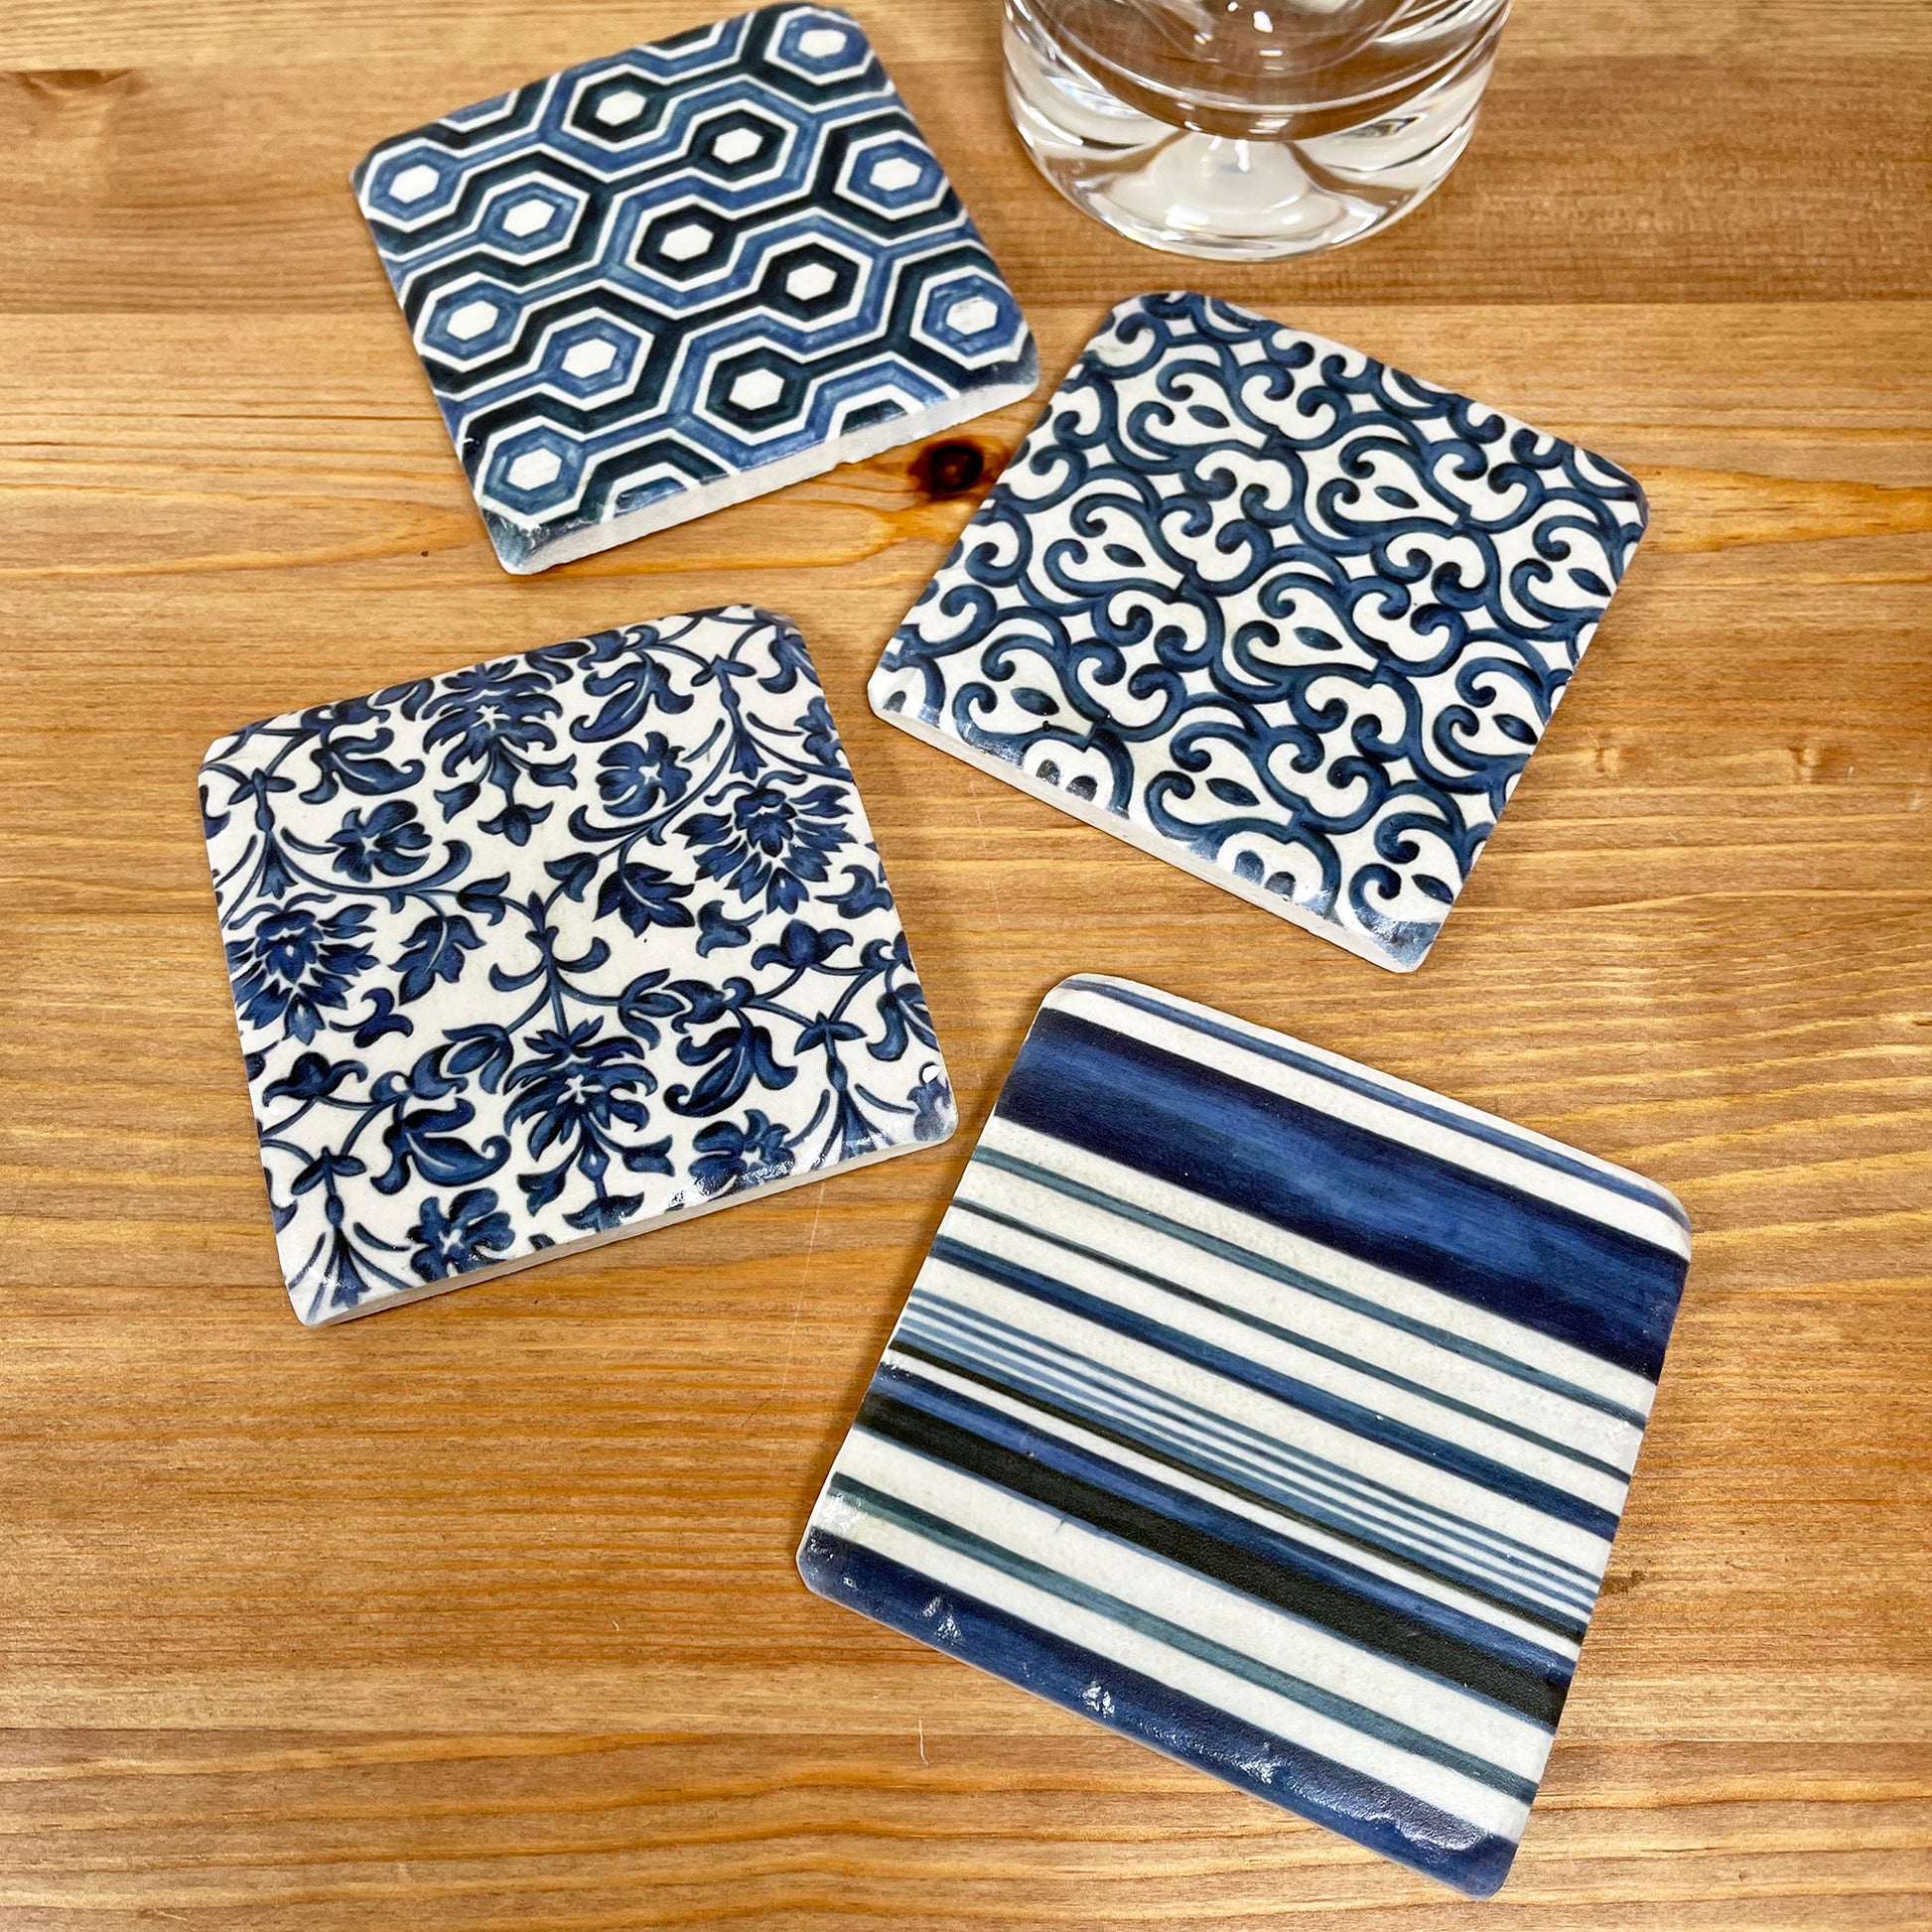 Blue Pattern Coasters Set Of 4 Ceramic Square Mediterranean Assorted Drinks Mat